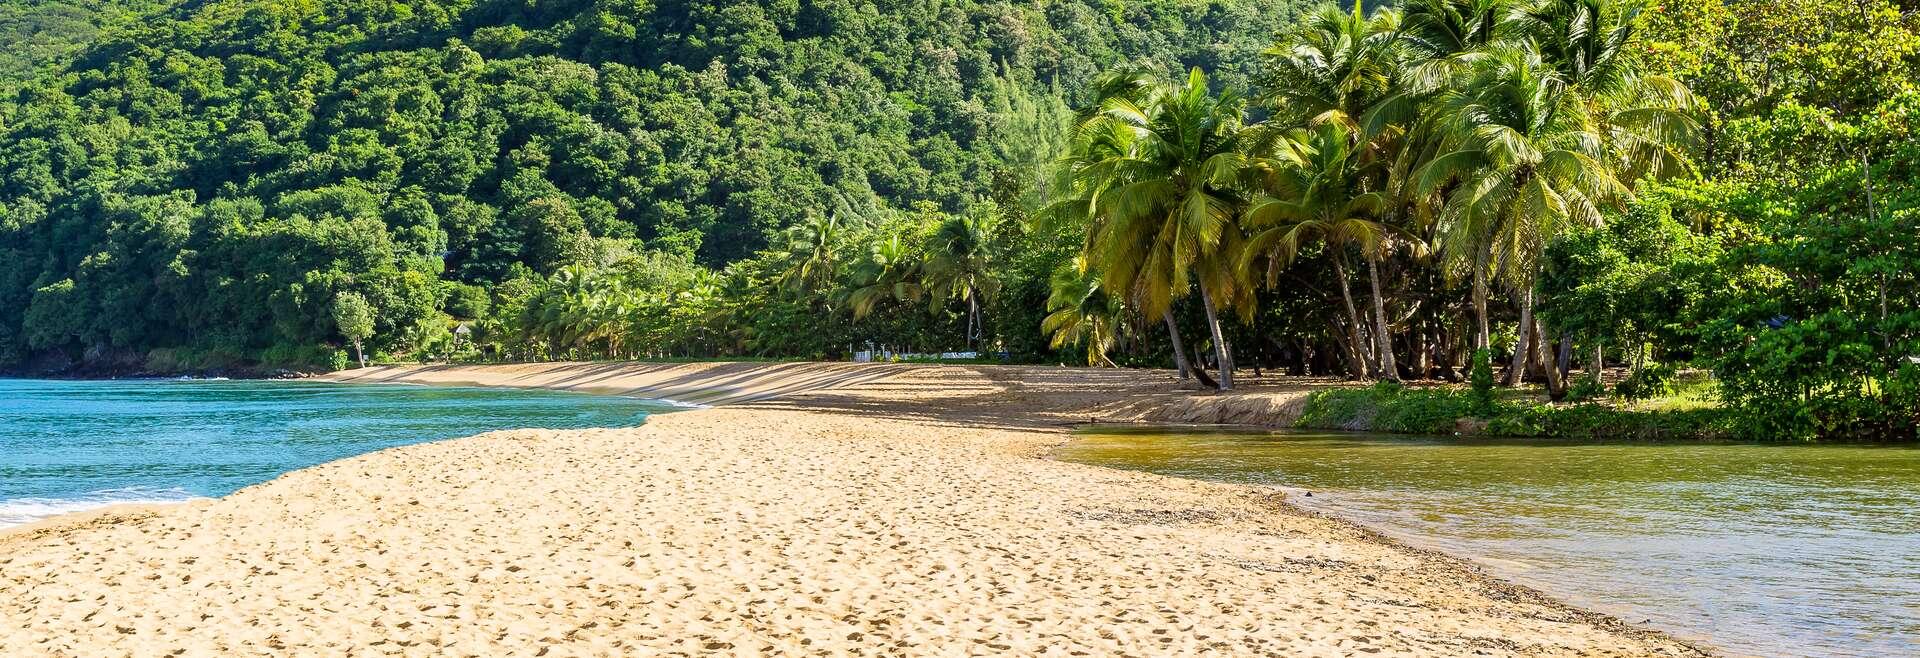 Basse-Terre, Guadeloupe, Karibik